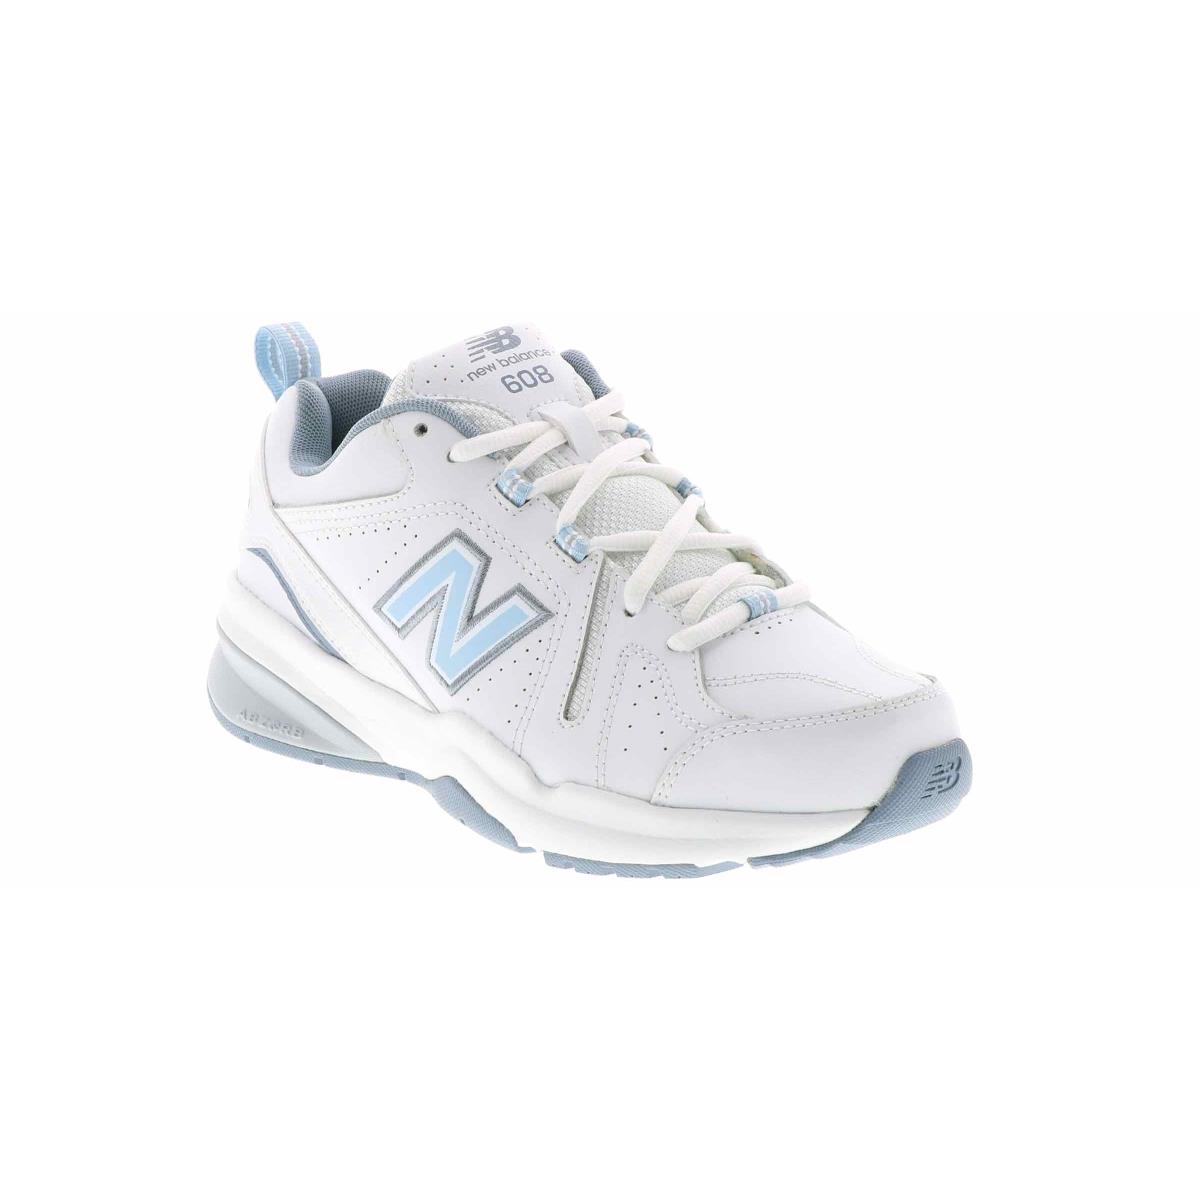 New Balance 608V5 Running Shoe White White